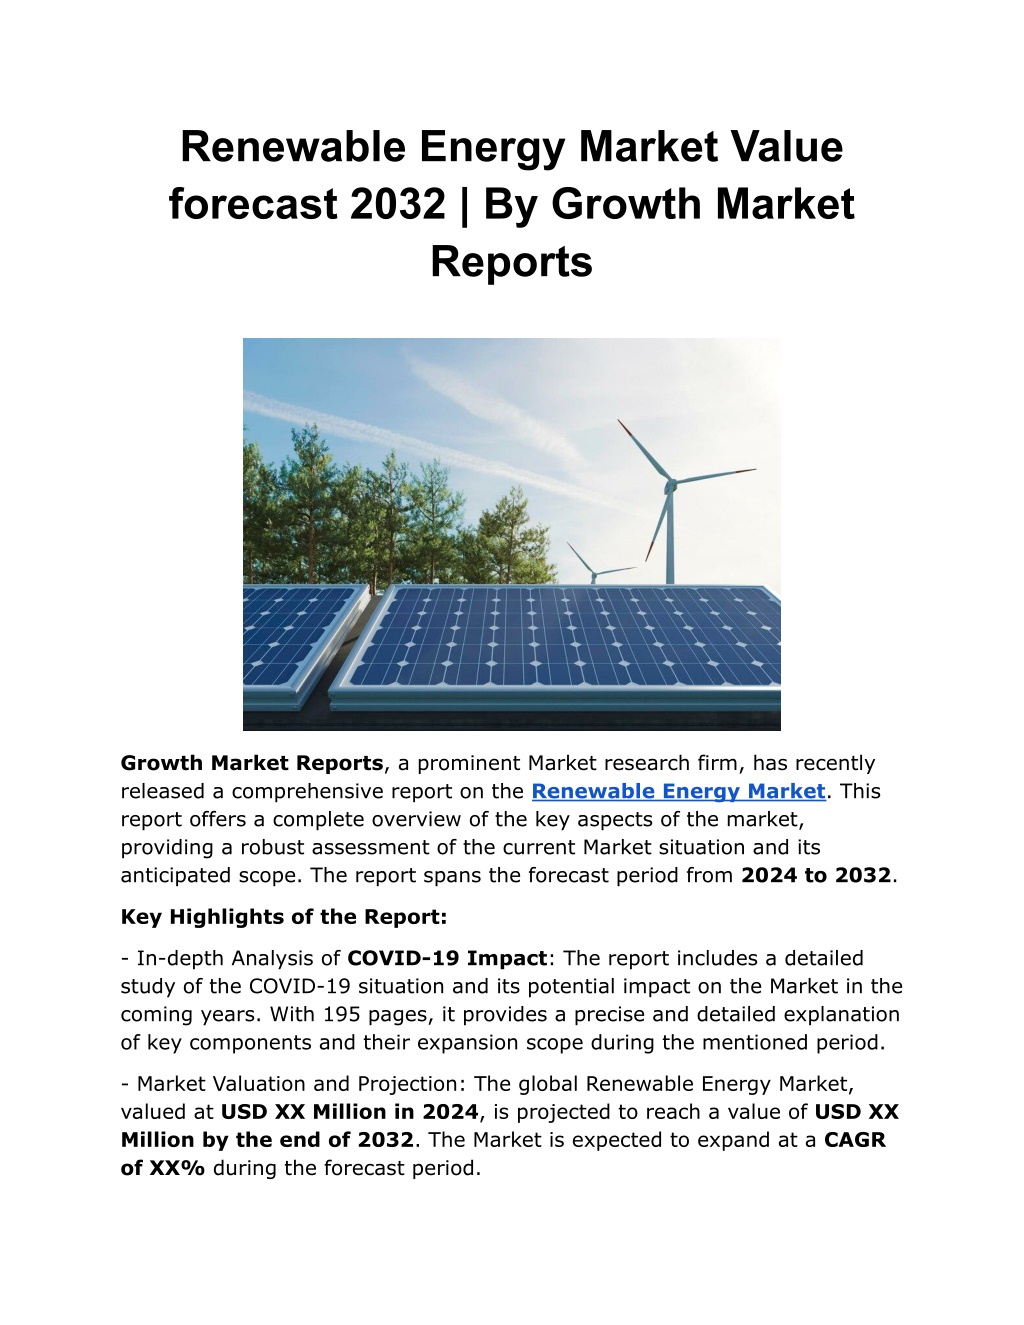 renewable energy market value forecast 2032 l.w